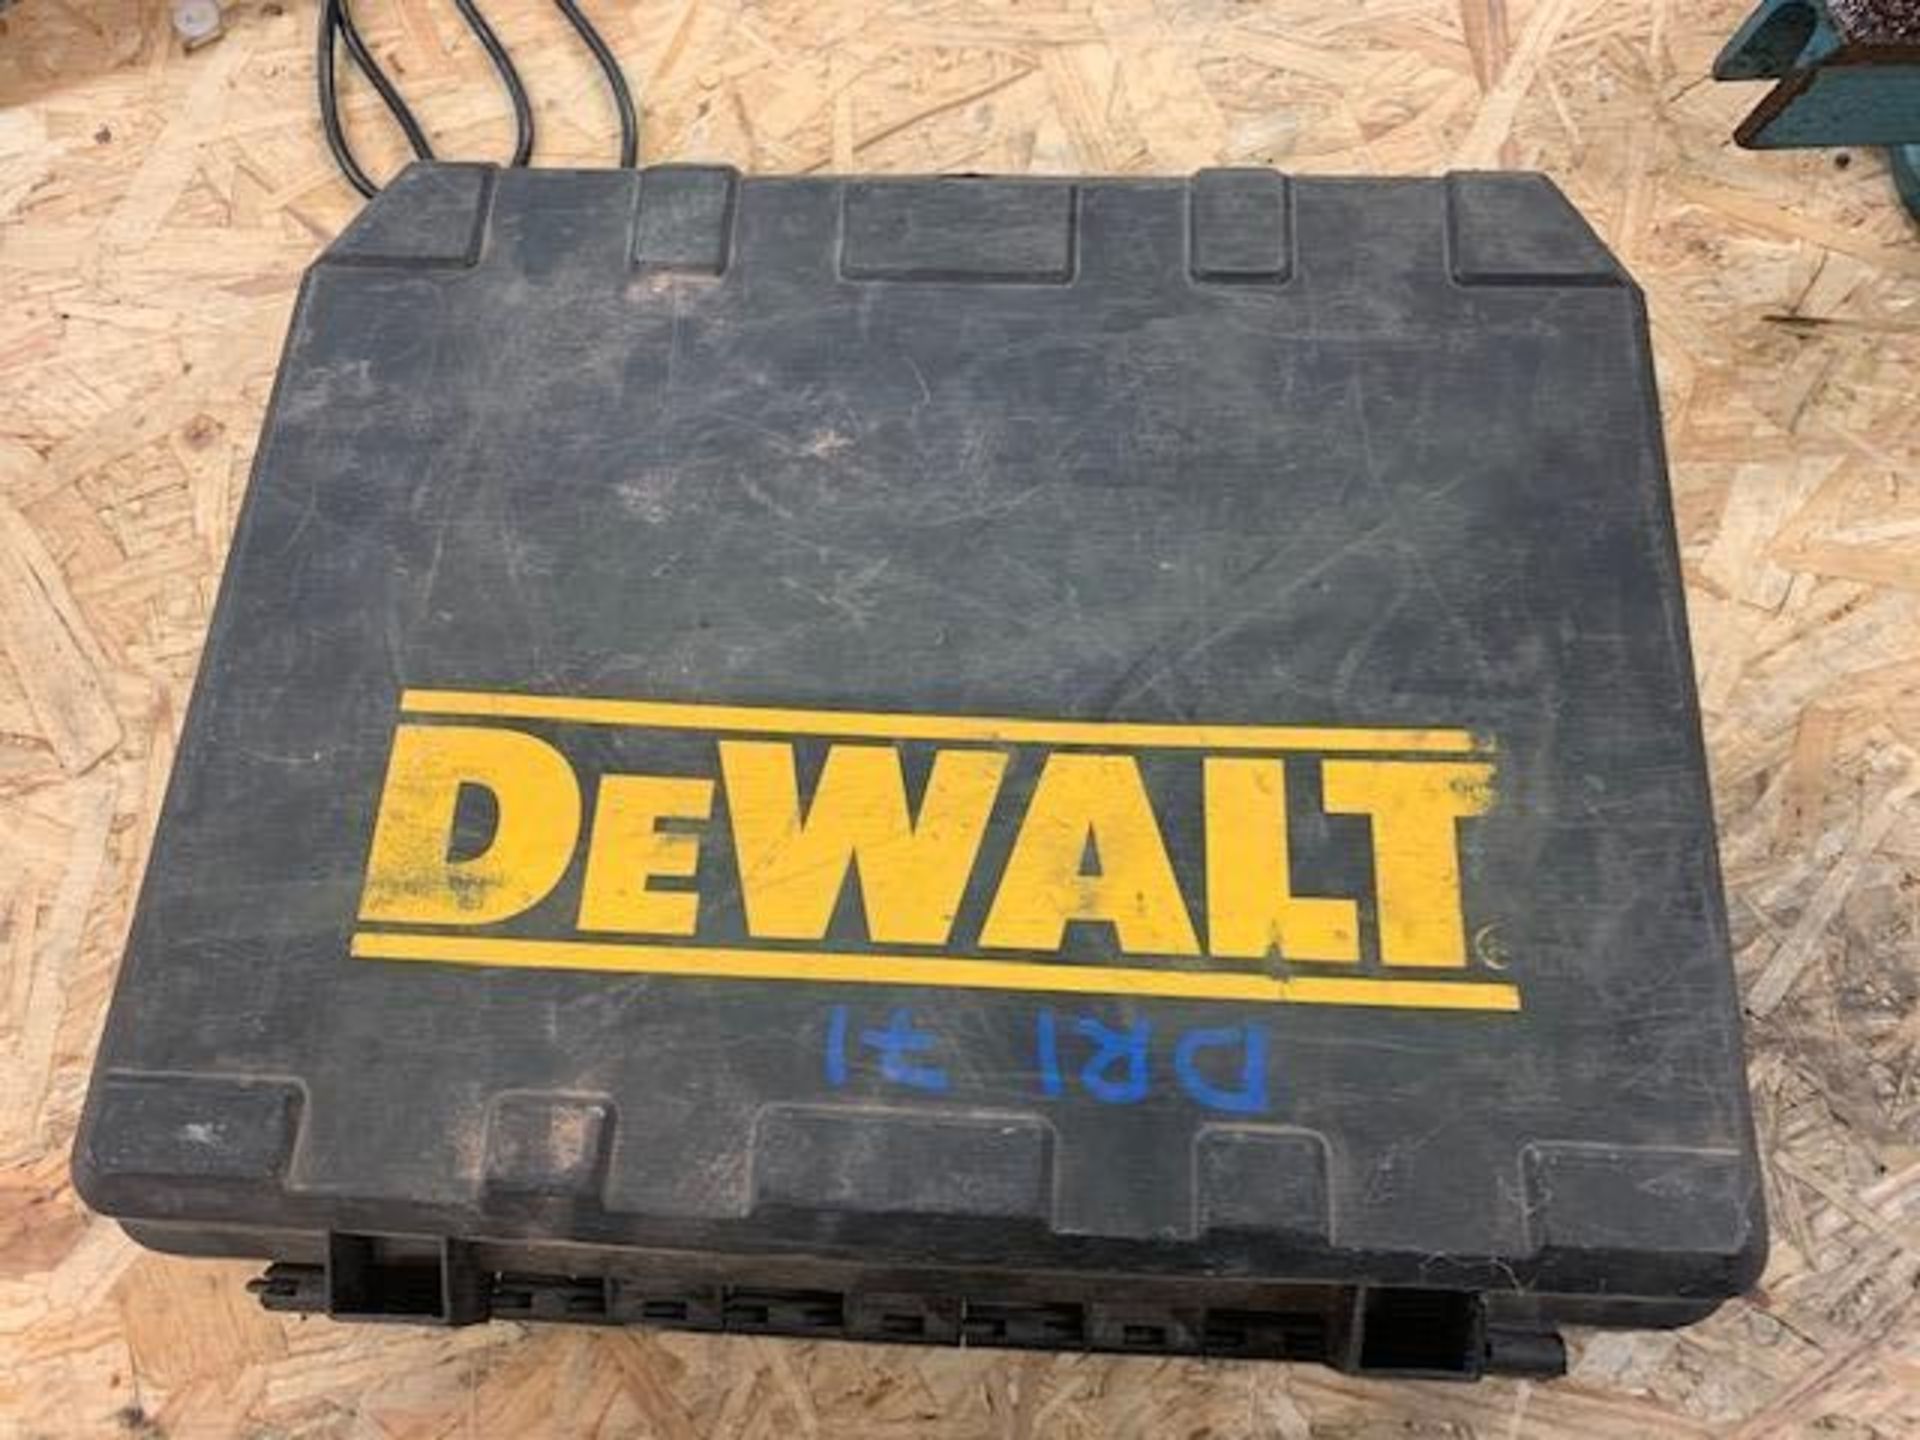 Dewalt DZ1570 LX 110v drill c/w case - Image 2 of 2